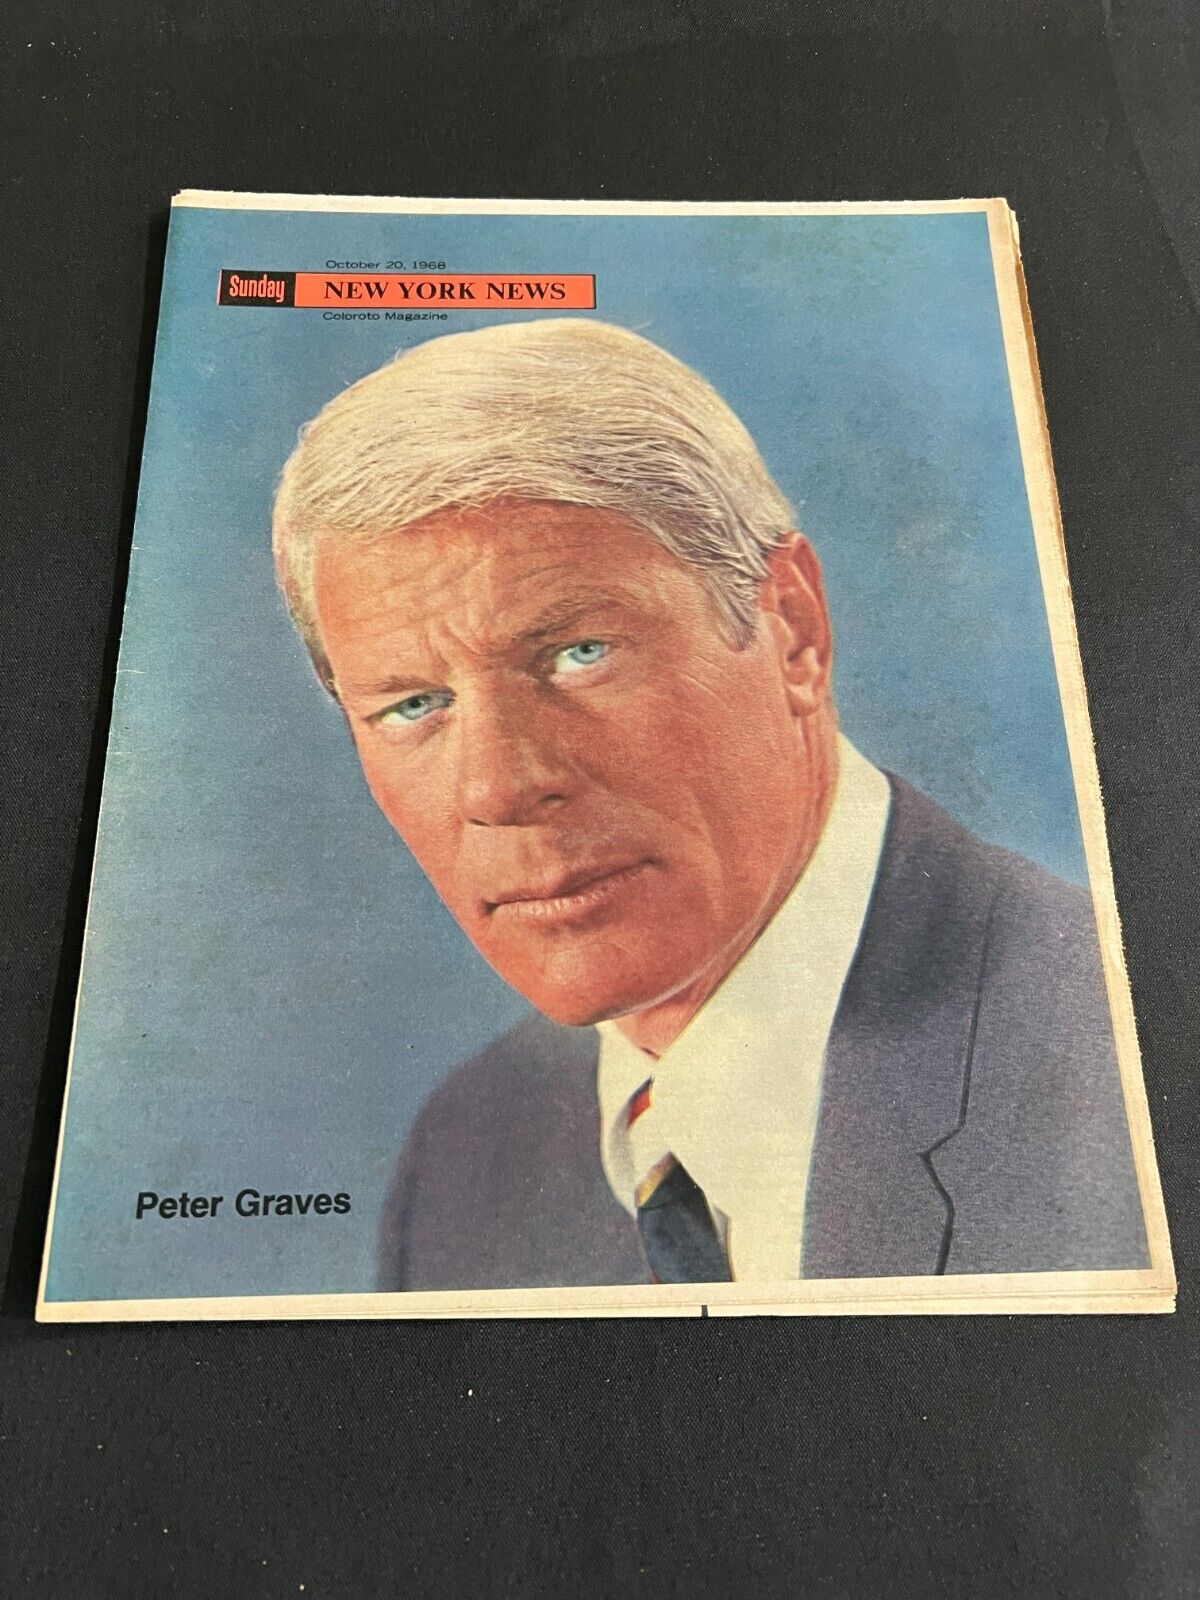 SUNDAY NEW YORK NEWS Coloroto Magazine Oct 20, 1968 PETER GRAVES Cover Photo